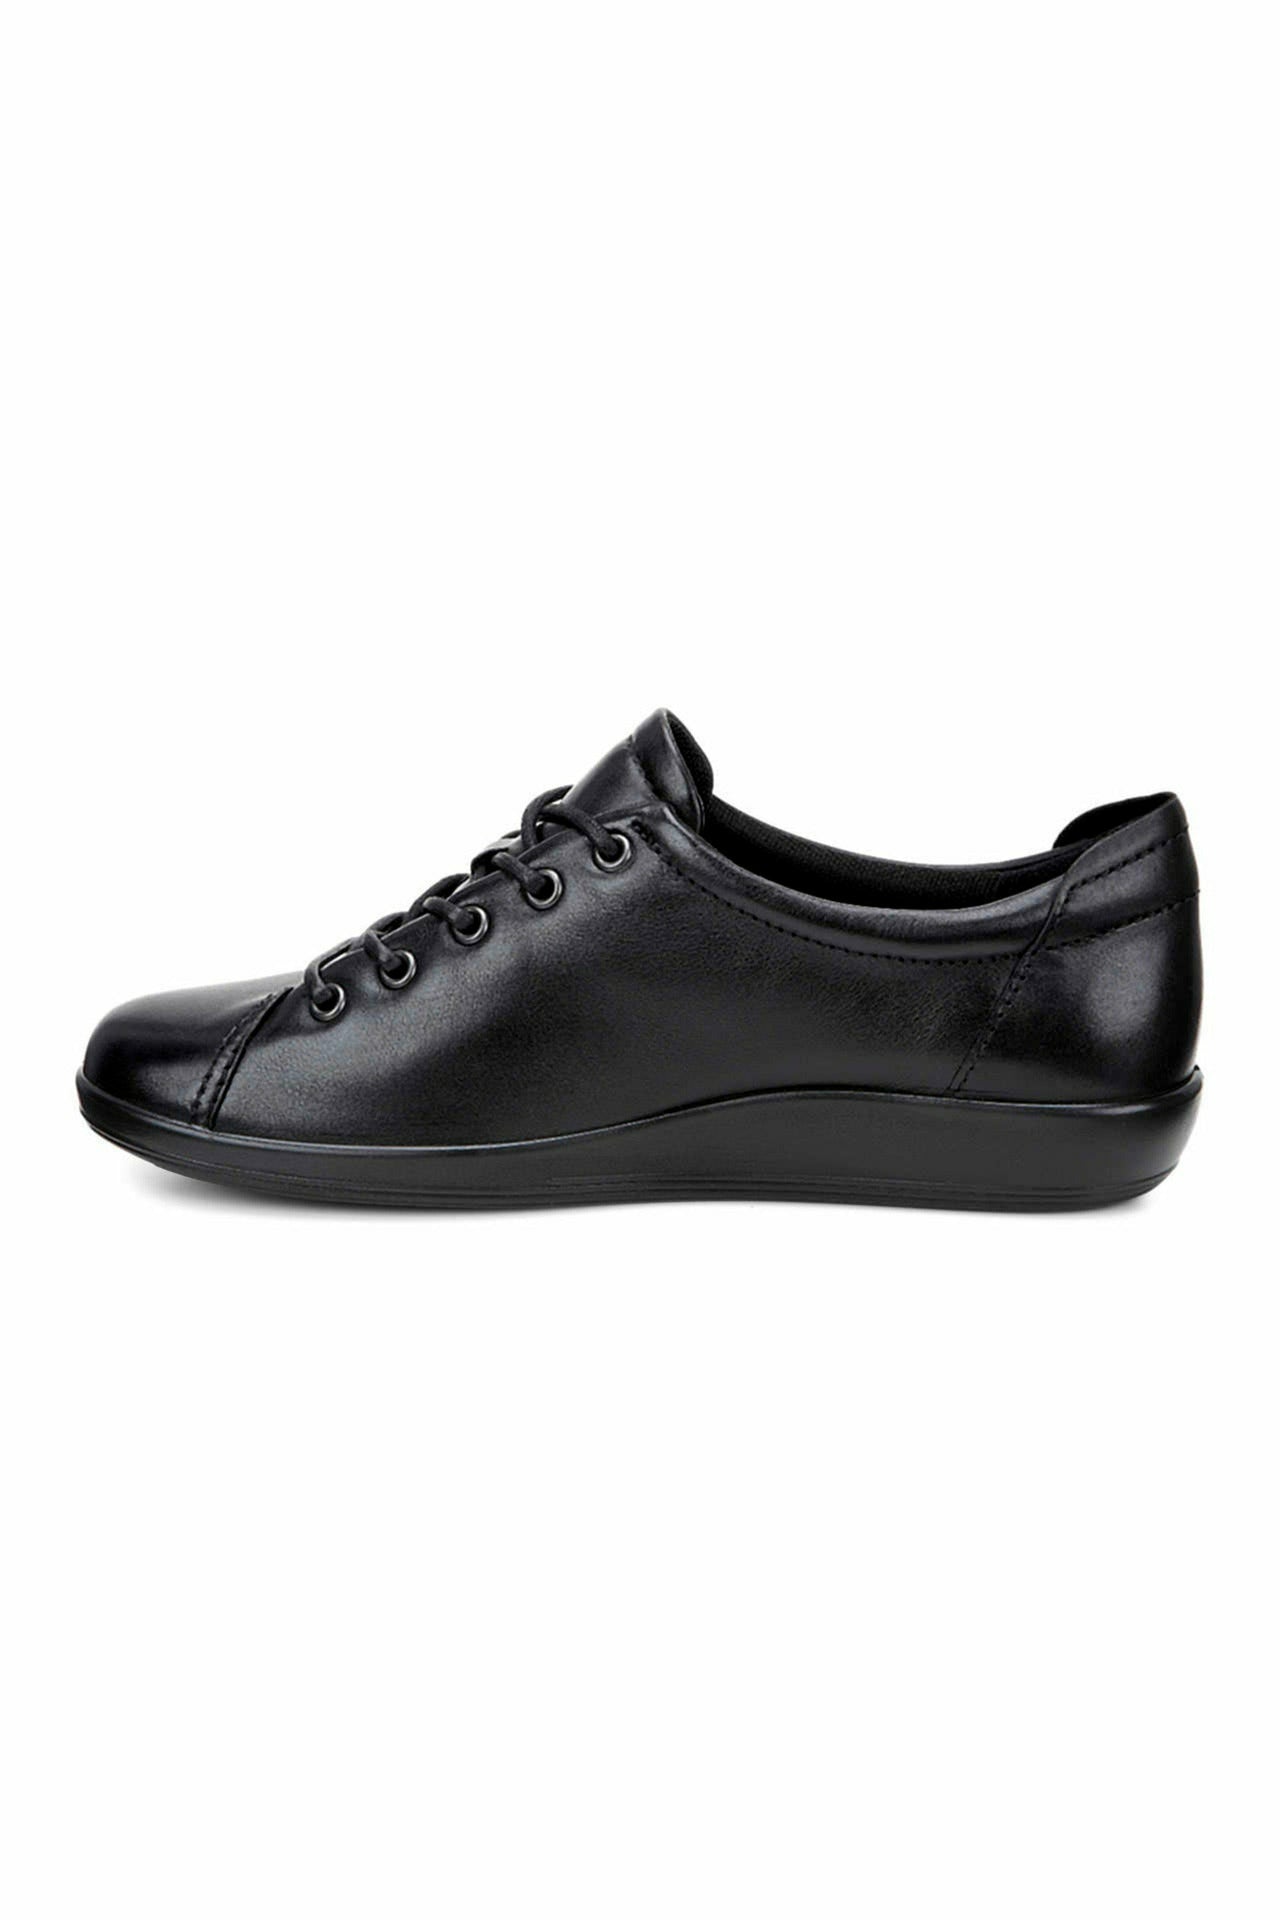 Ecco Soft 2.0 206503 56723 in black leather